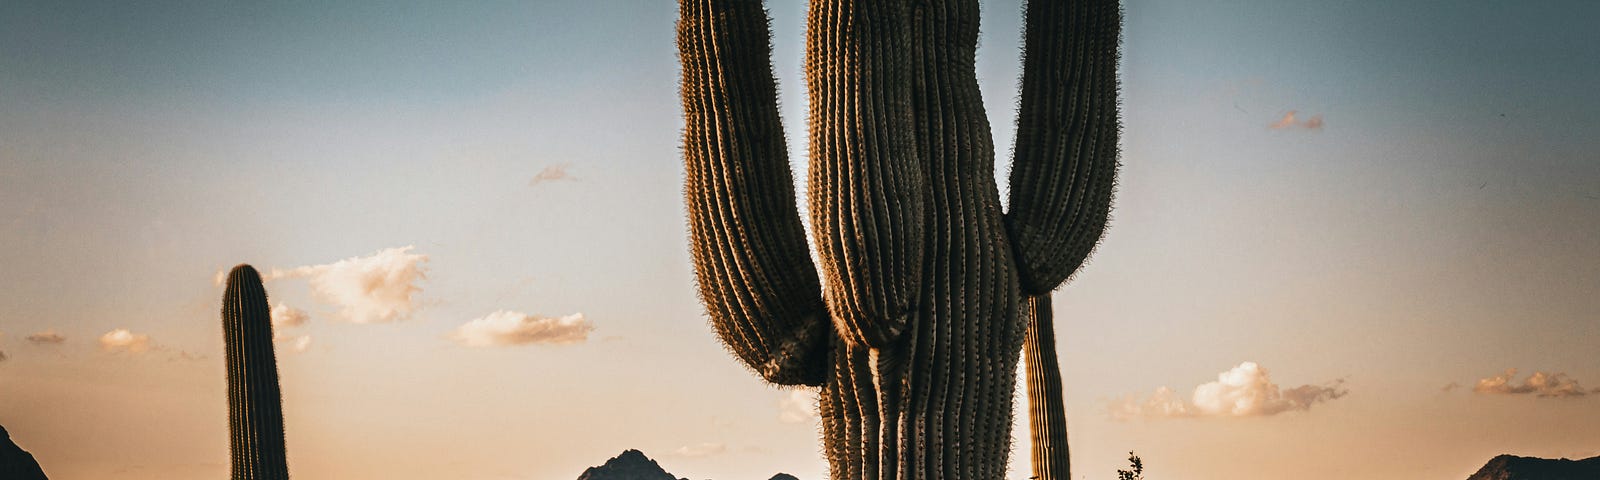 A cactus in the desert